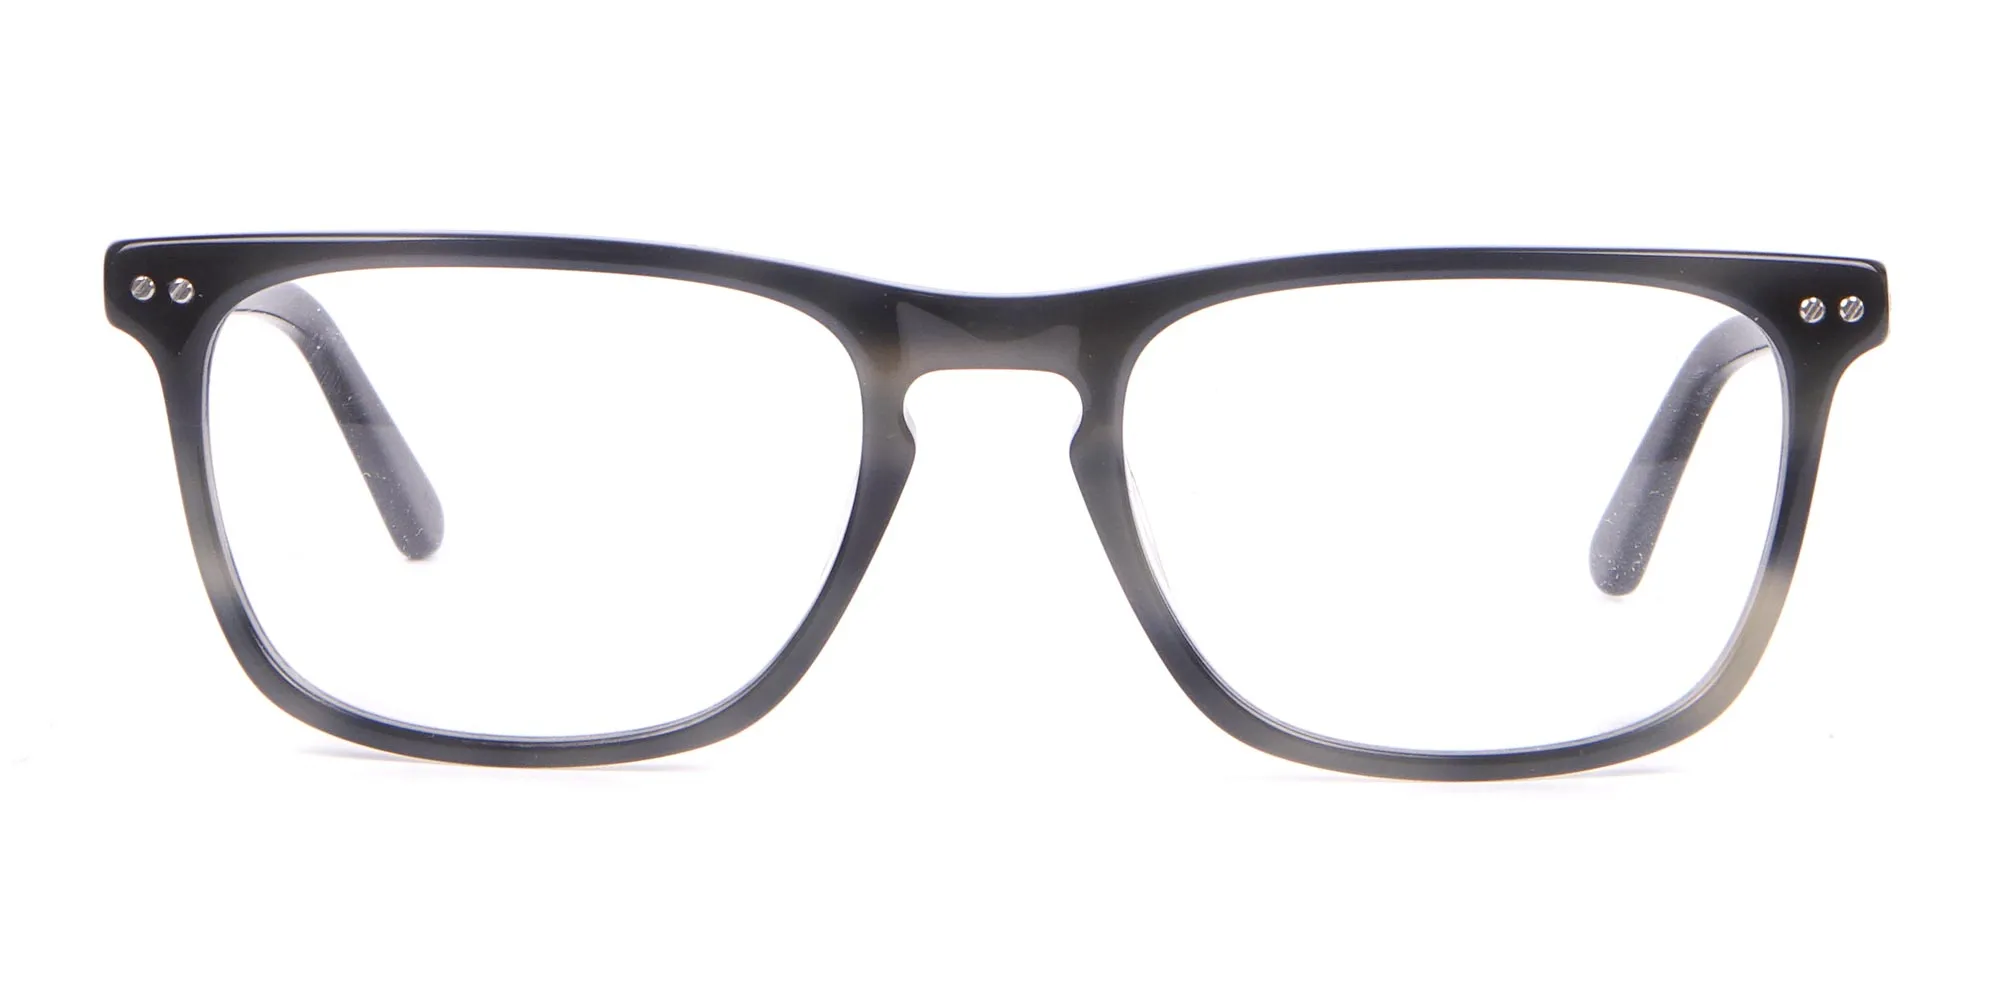 Calvin Klein CK18513 Rectangular Glasses in Grey Tortoise-2